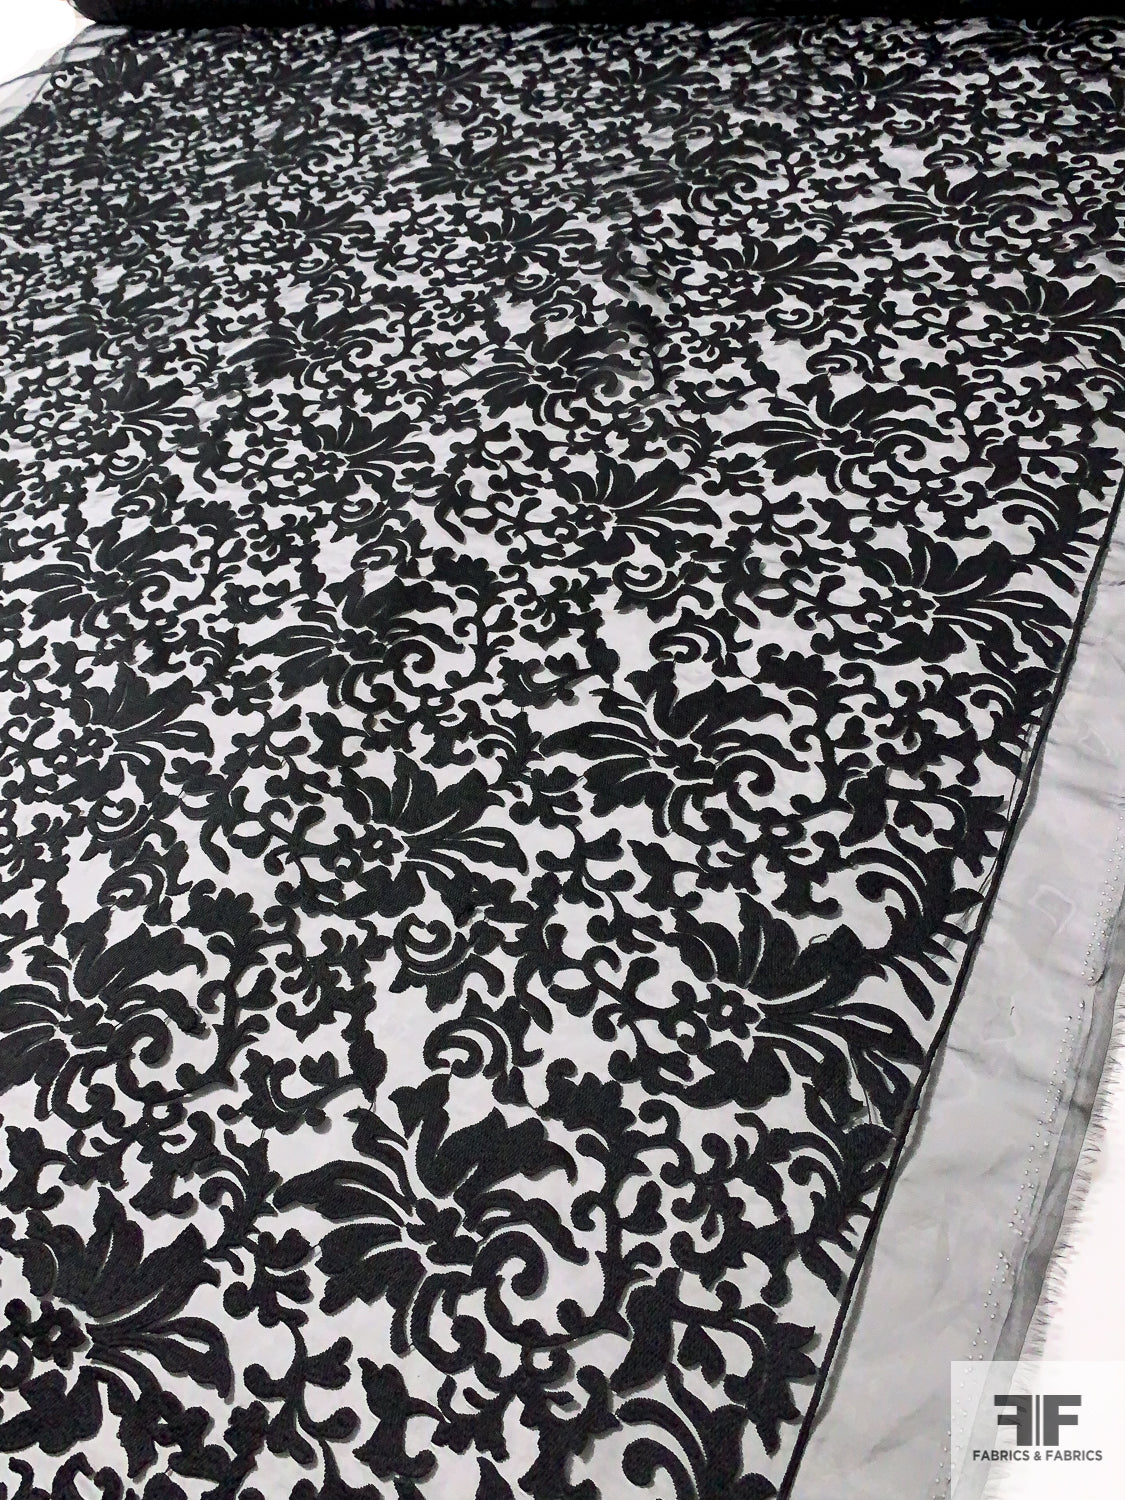 Damask-Like Floral Embroidered Polyester Organza - Black